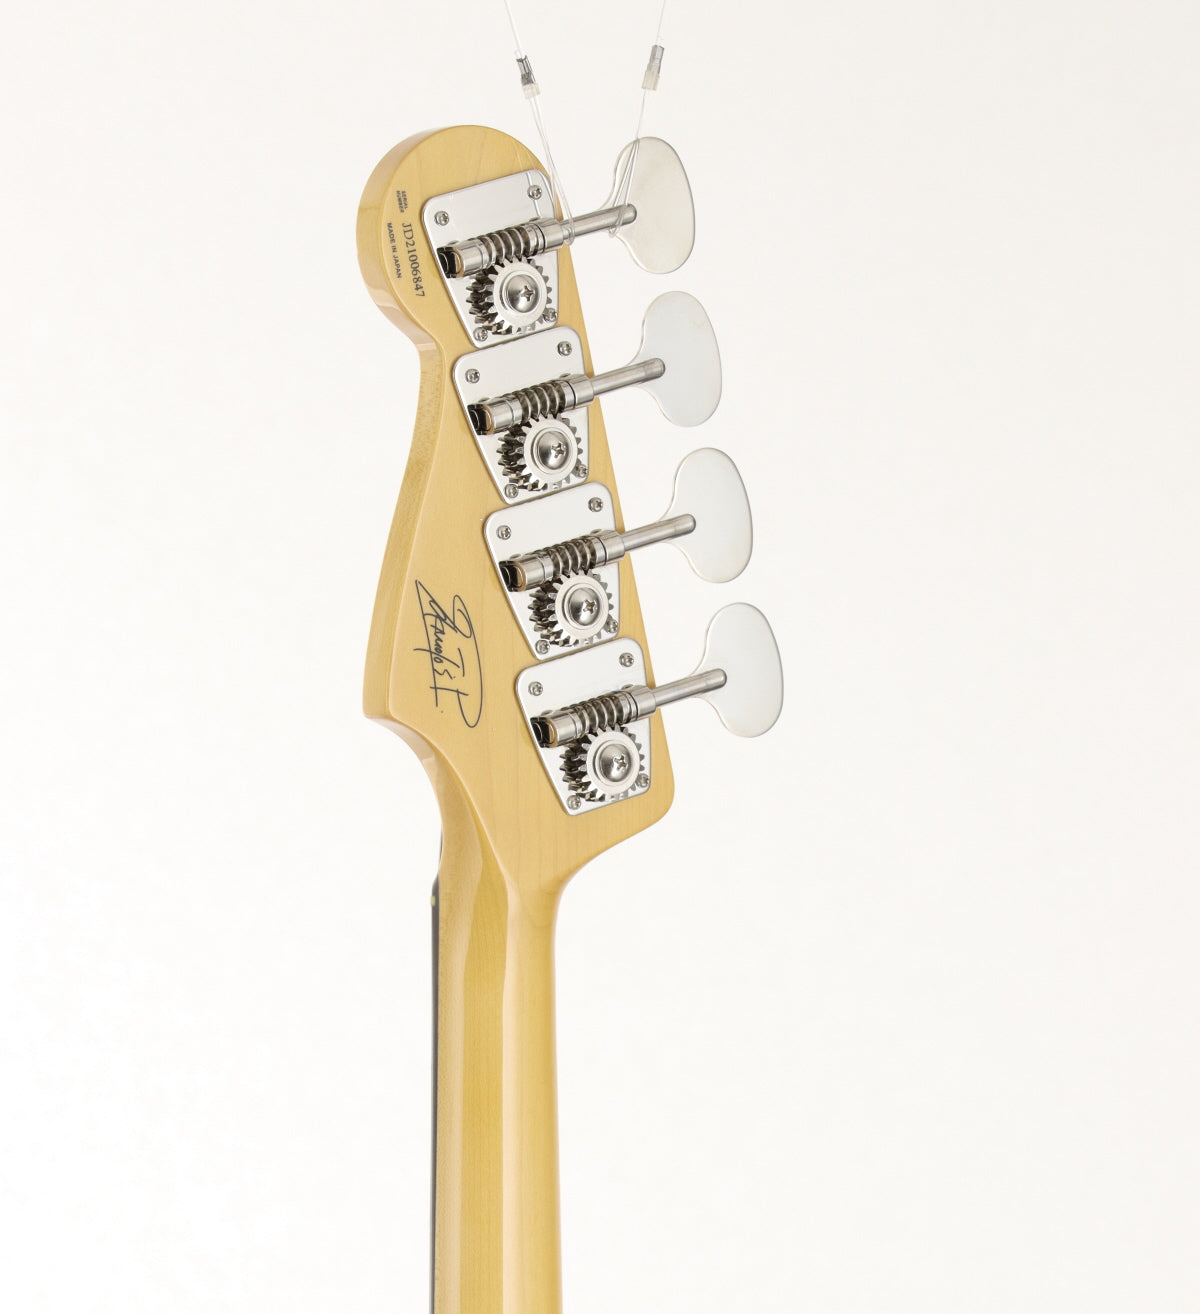 [SN JD21006847] USED Fender / HAMA OKAMOTO Precision Bass #4 3 Color Sunburst Made in Japan 2021 [09]